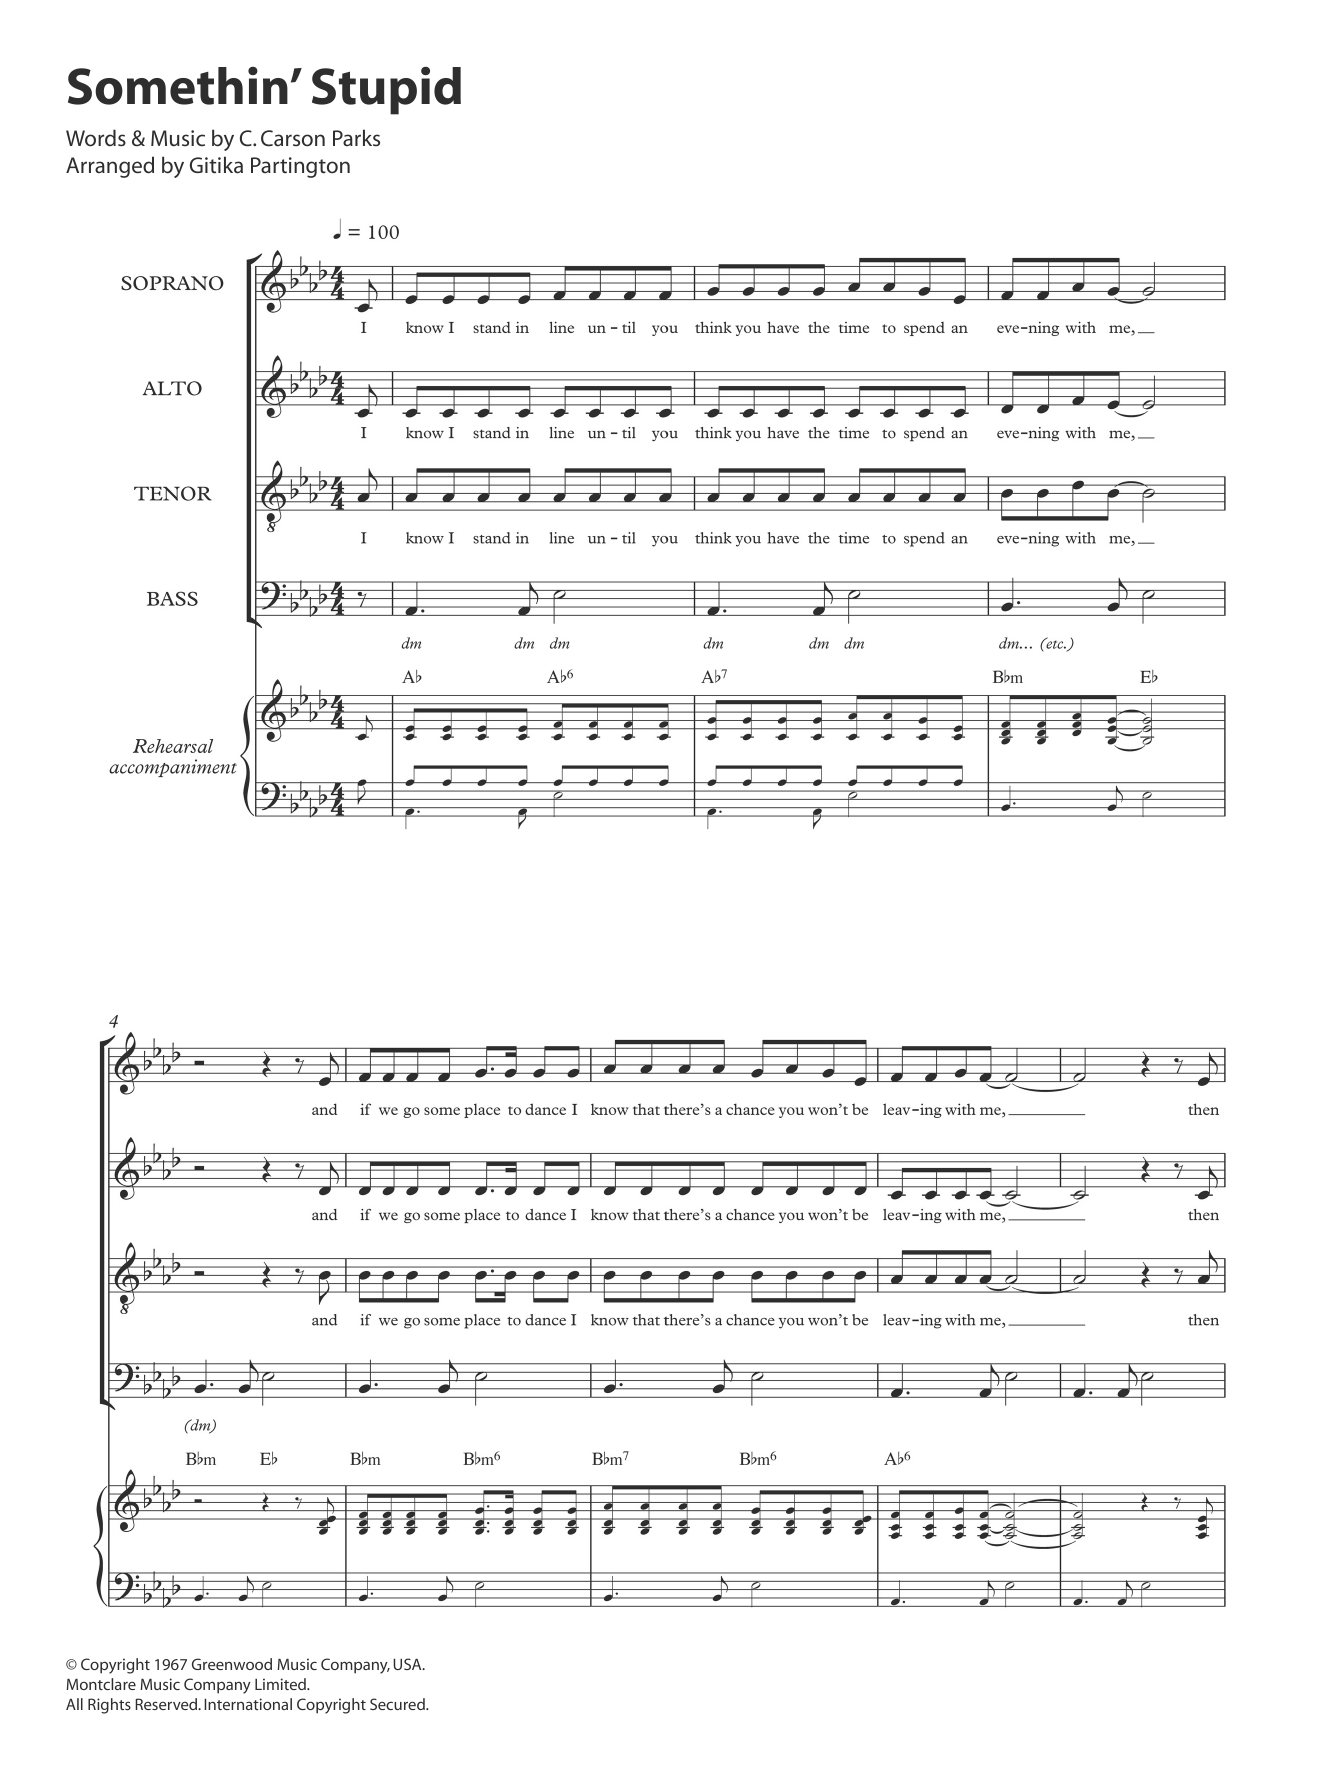 Frank Sinatra Somethin' Stupid (arr. Gitika Partington) sheet music notes and chords arranged for SATB Choir